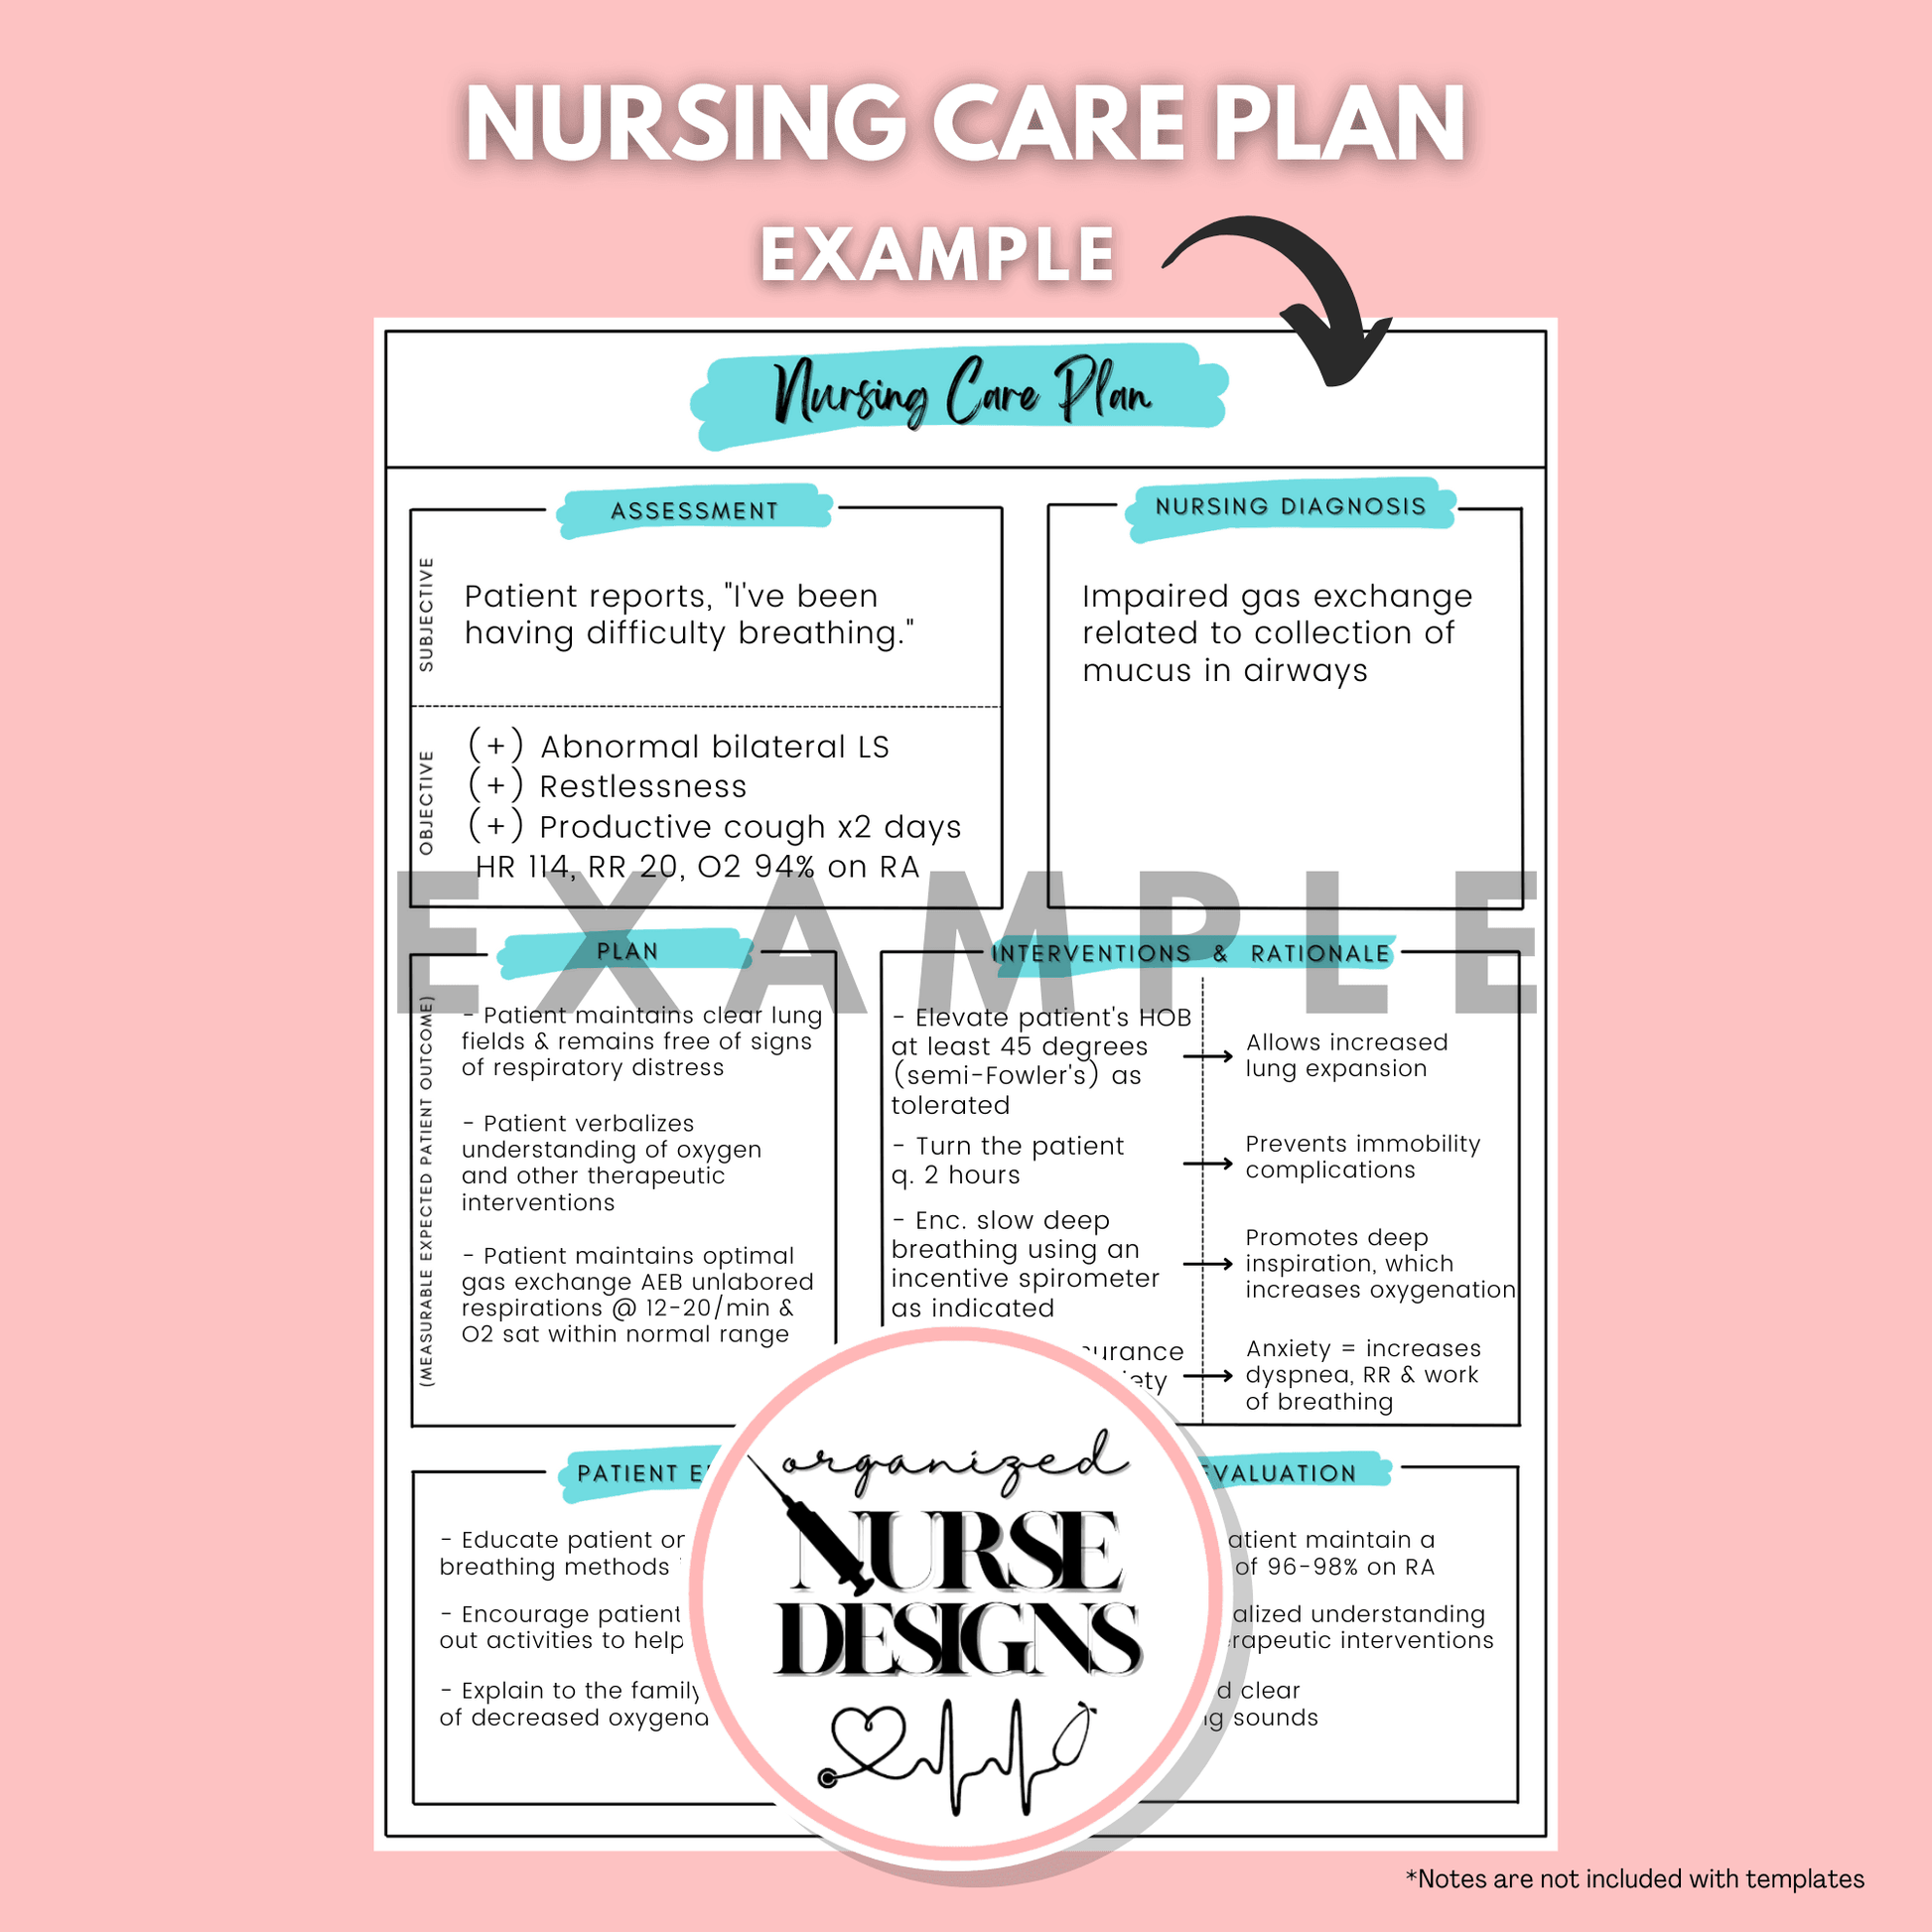 Nursing Care Plan Templates for Nursing Students by OrganizedNurseDesigns